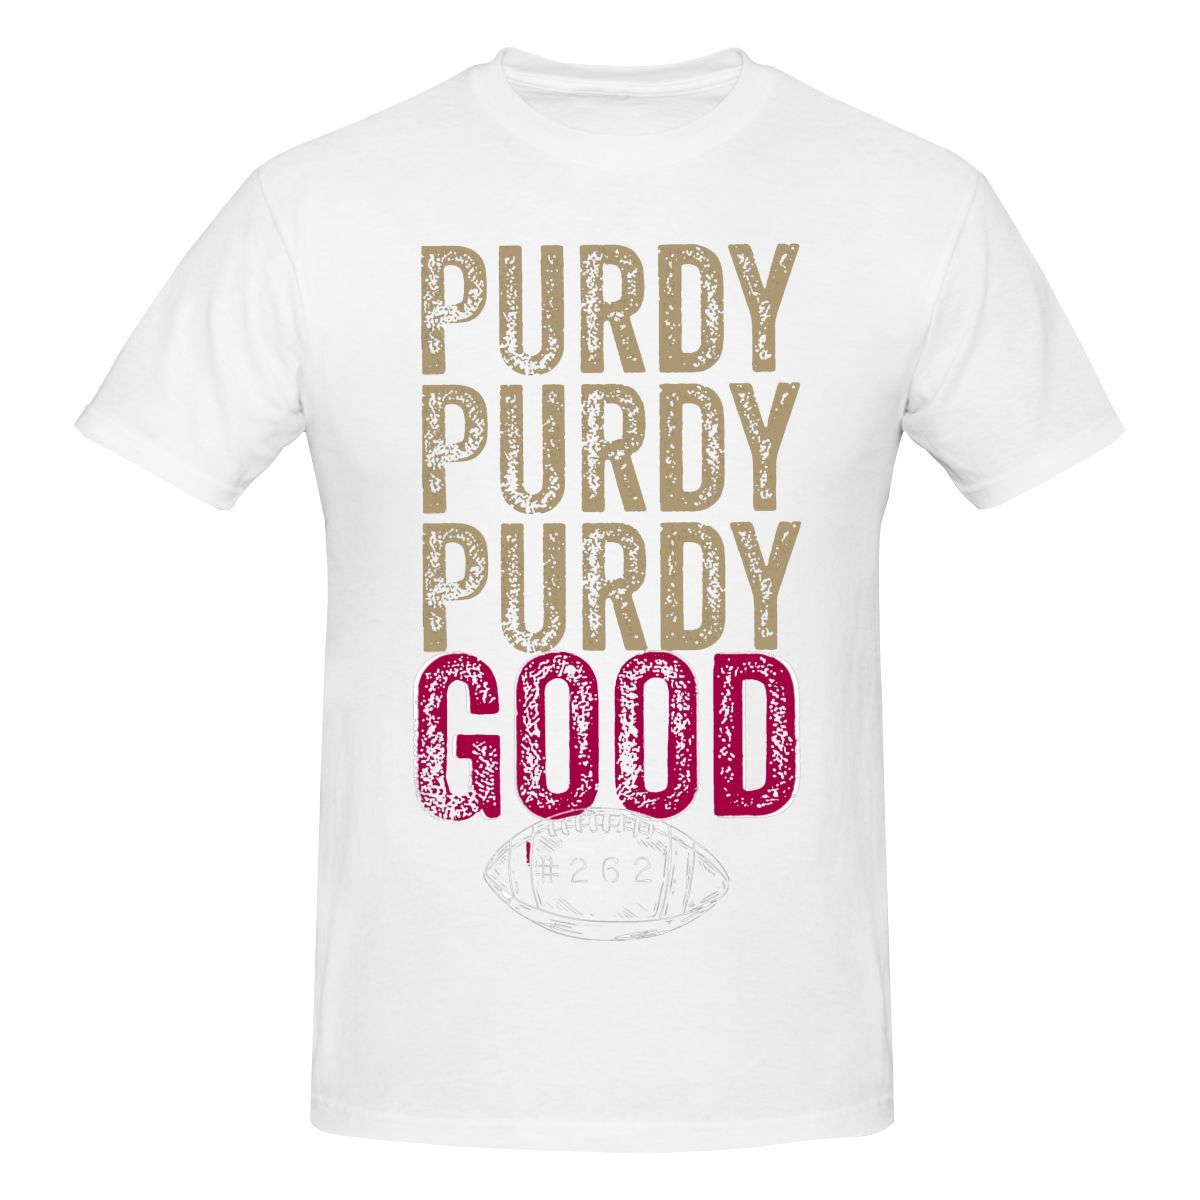 Brock Purdy Good T Shirt Cotton Custom Short-MF00105-Veeddydropshipping